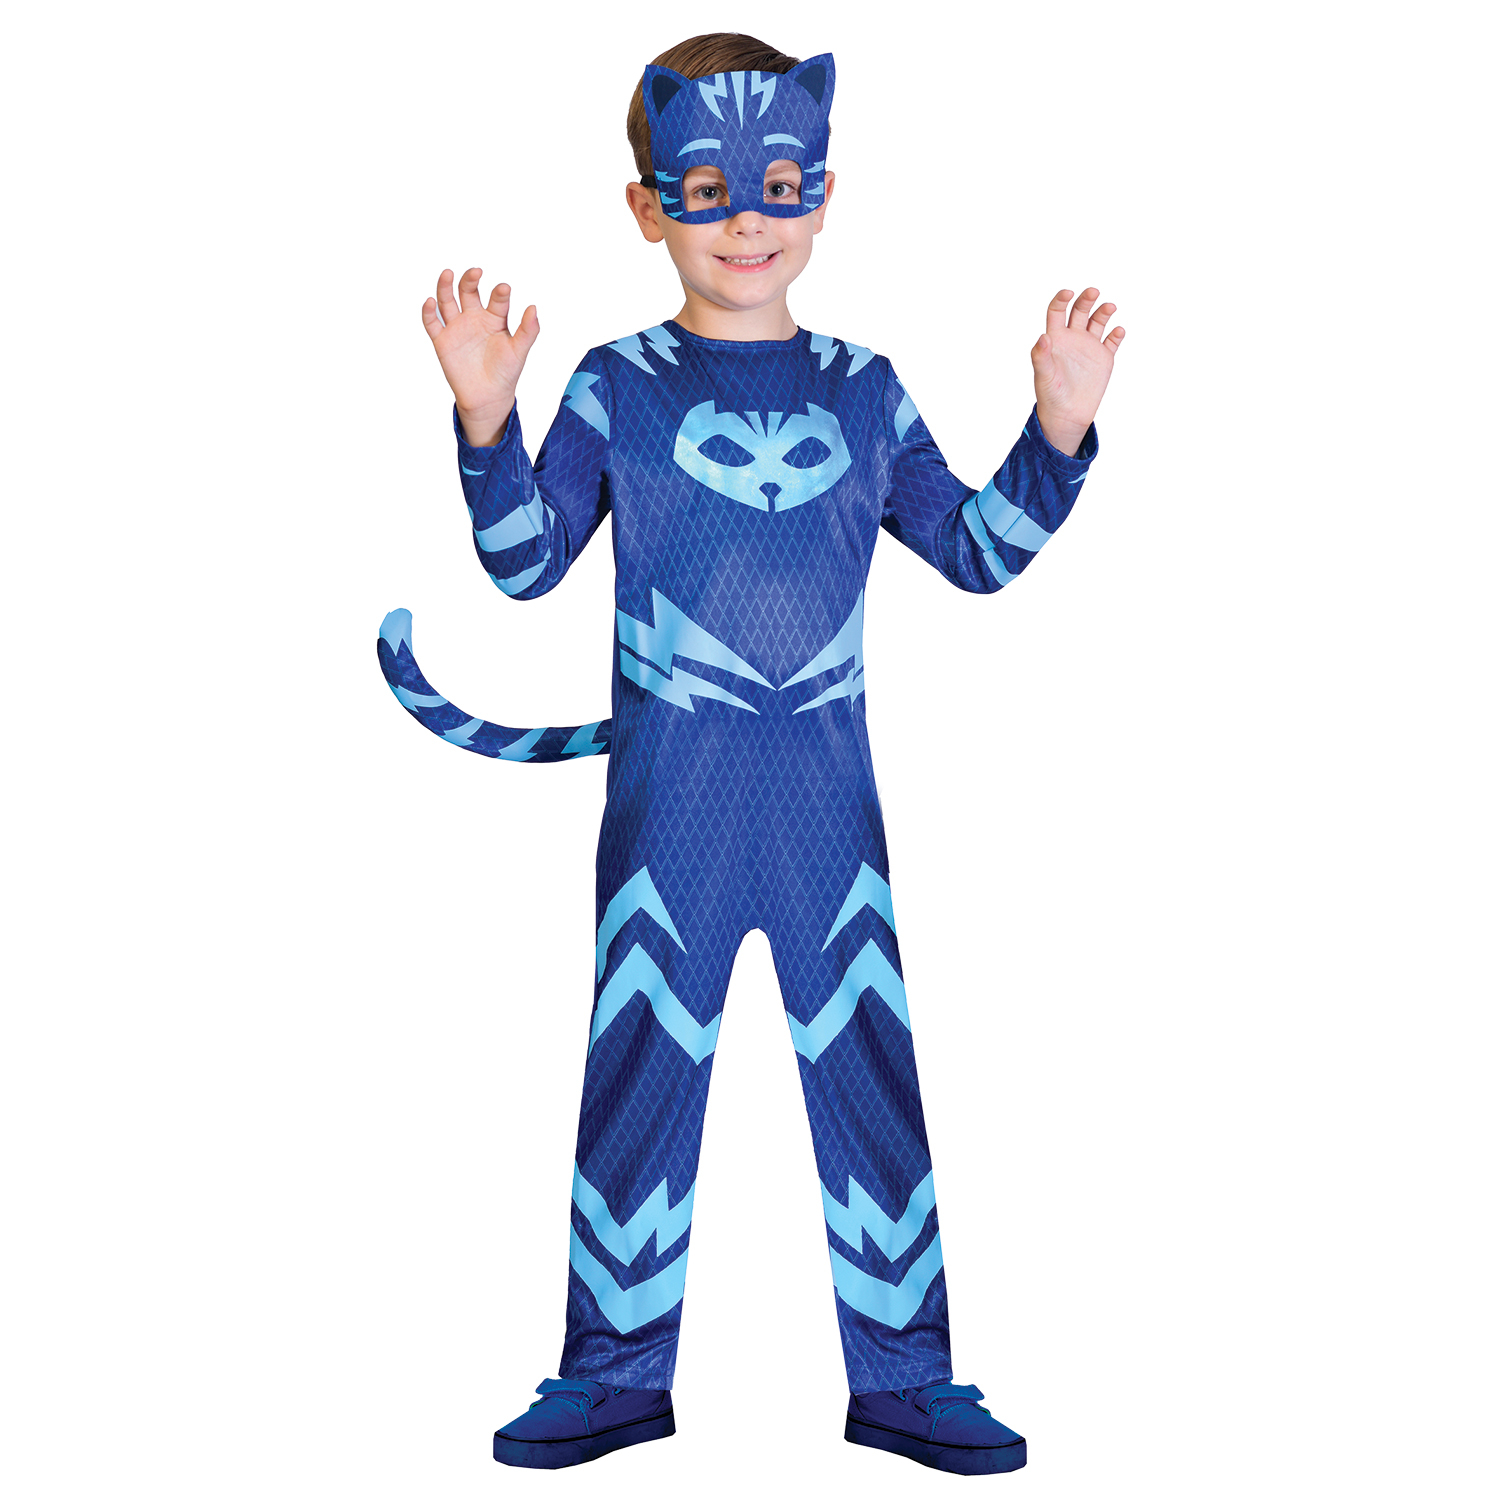 Deguisement enfant garcon pjmasks catboy character-5-6ans – Orca